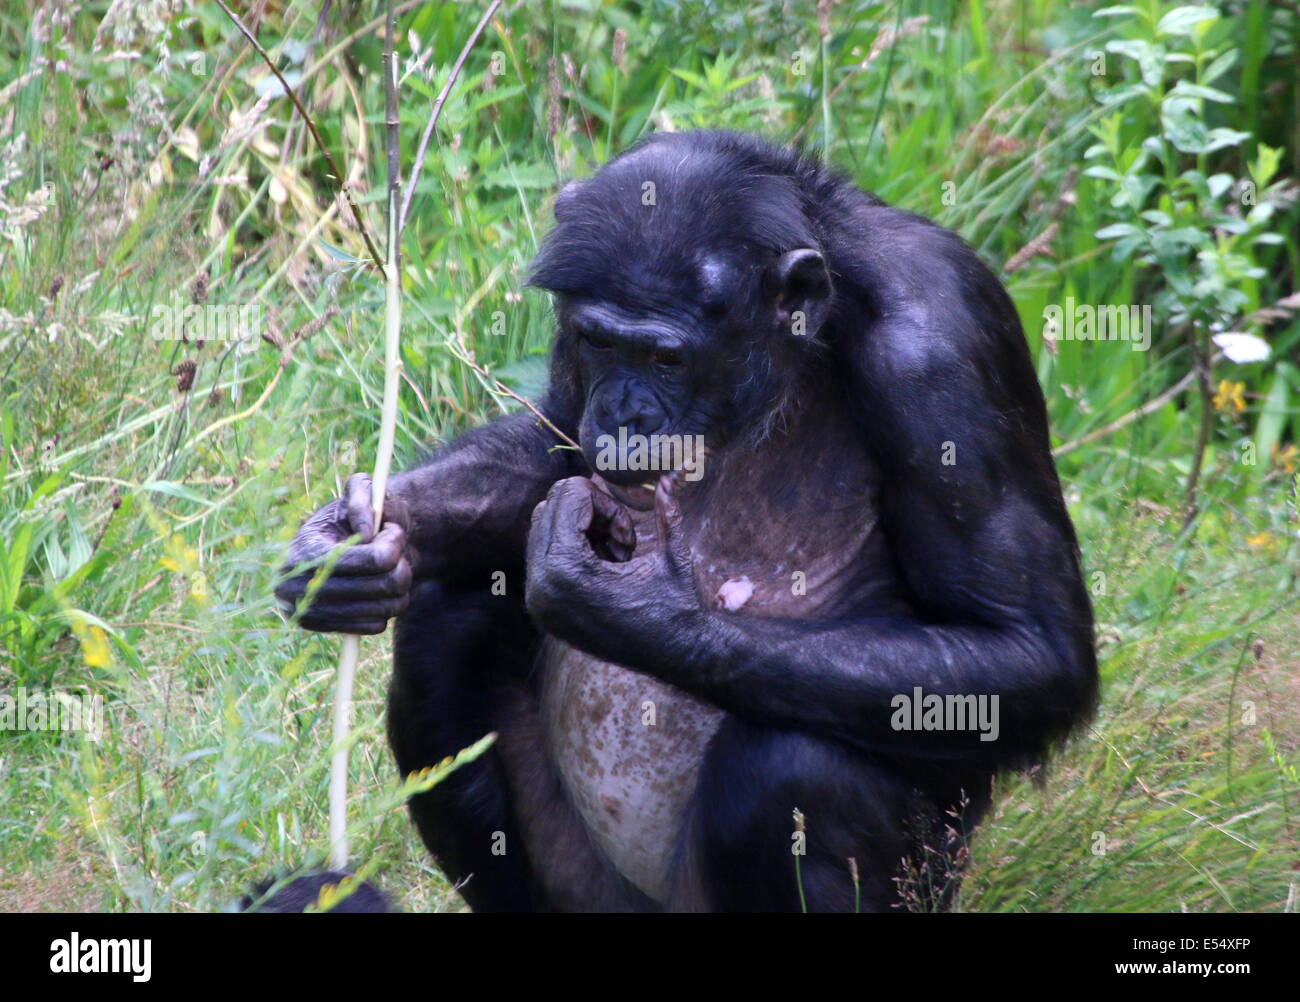 Hembras maduras (anteriormente) el bonobo o chimpancé pigmeo (Pan paniscus) en un entorno natural Foto de stock